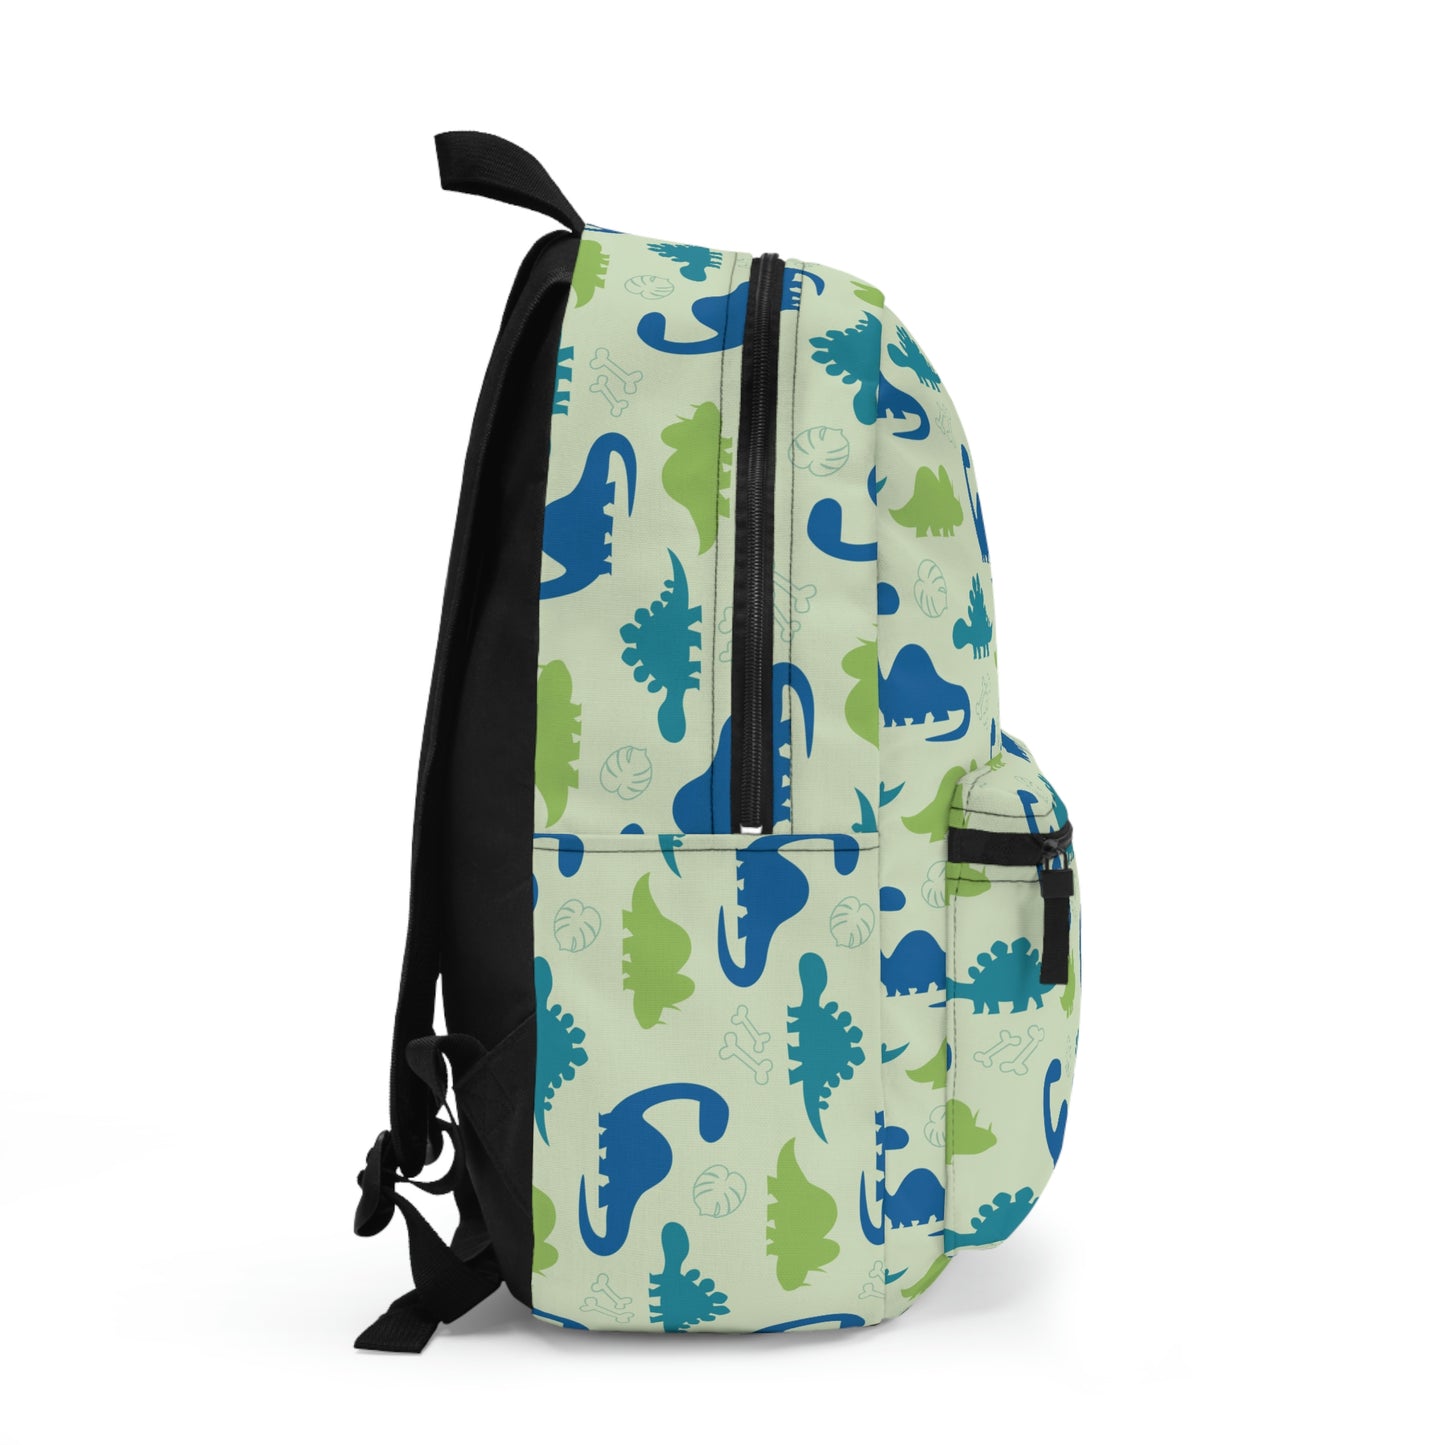 Dinosaurus Green Blue Backpack